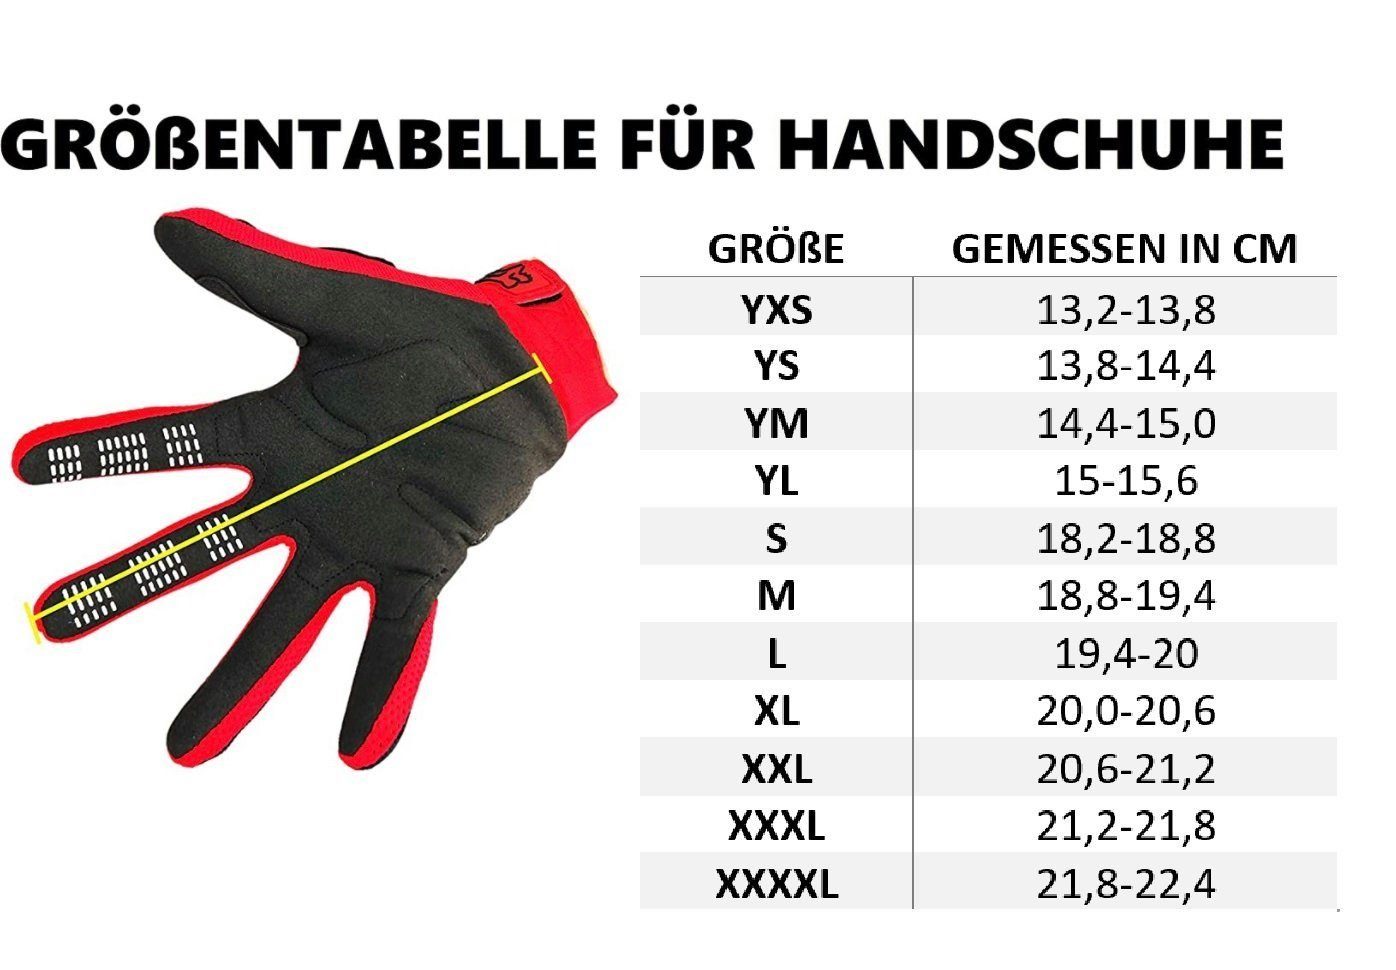 Fox Racing Fahrradhandschuhe Fox Ranger Maroon Handschuhe Dark Glove